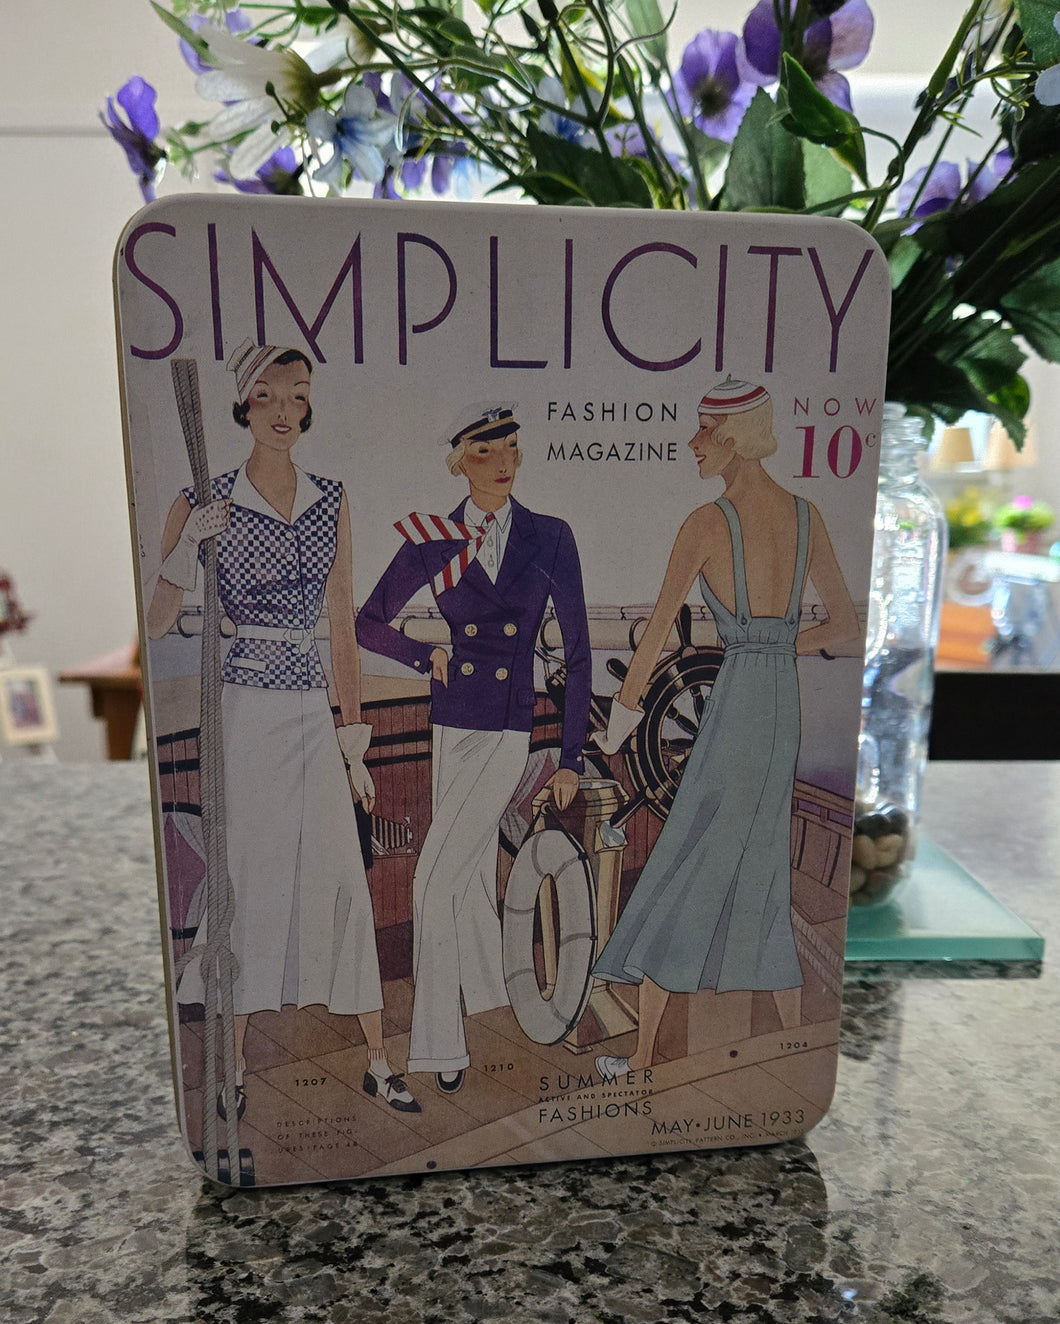 Simplicity Magazine